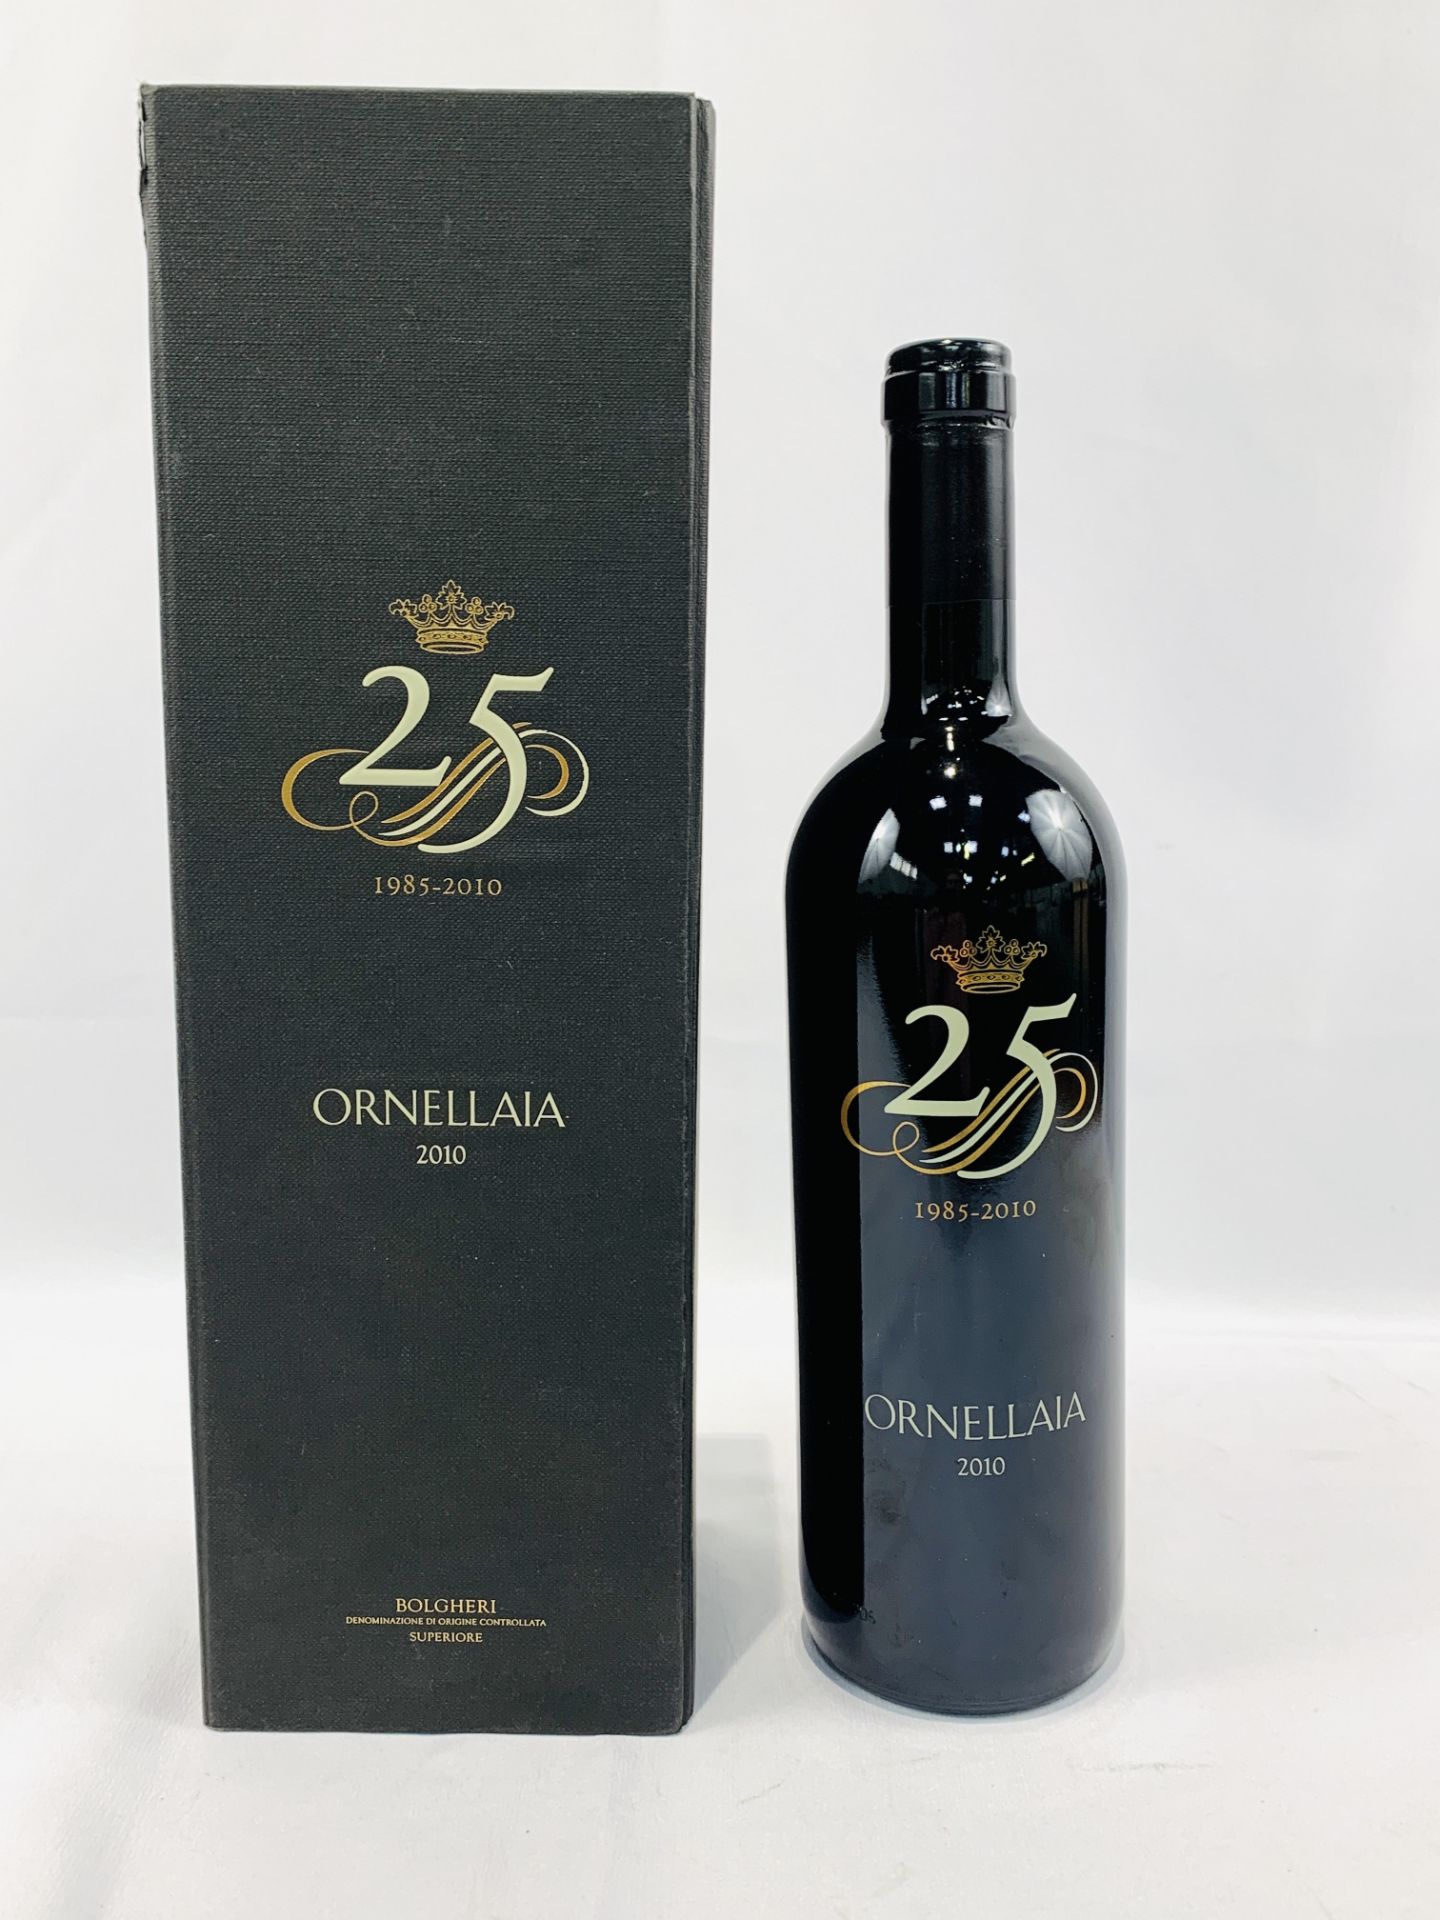 75cl bottle of 2010 Ornellaia Bolgheri Superiore